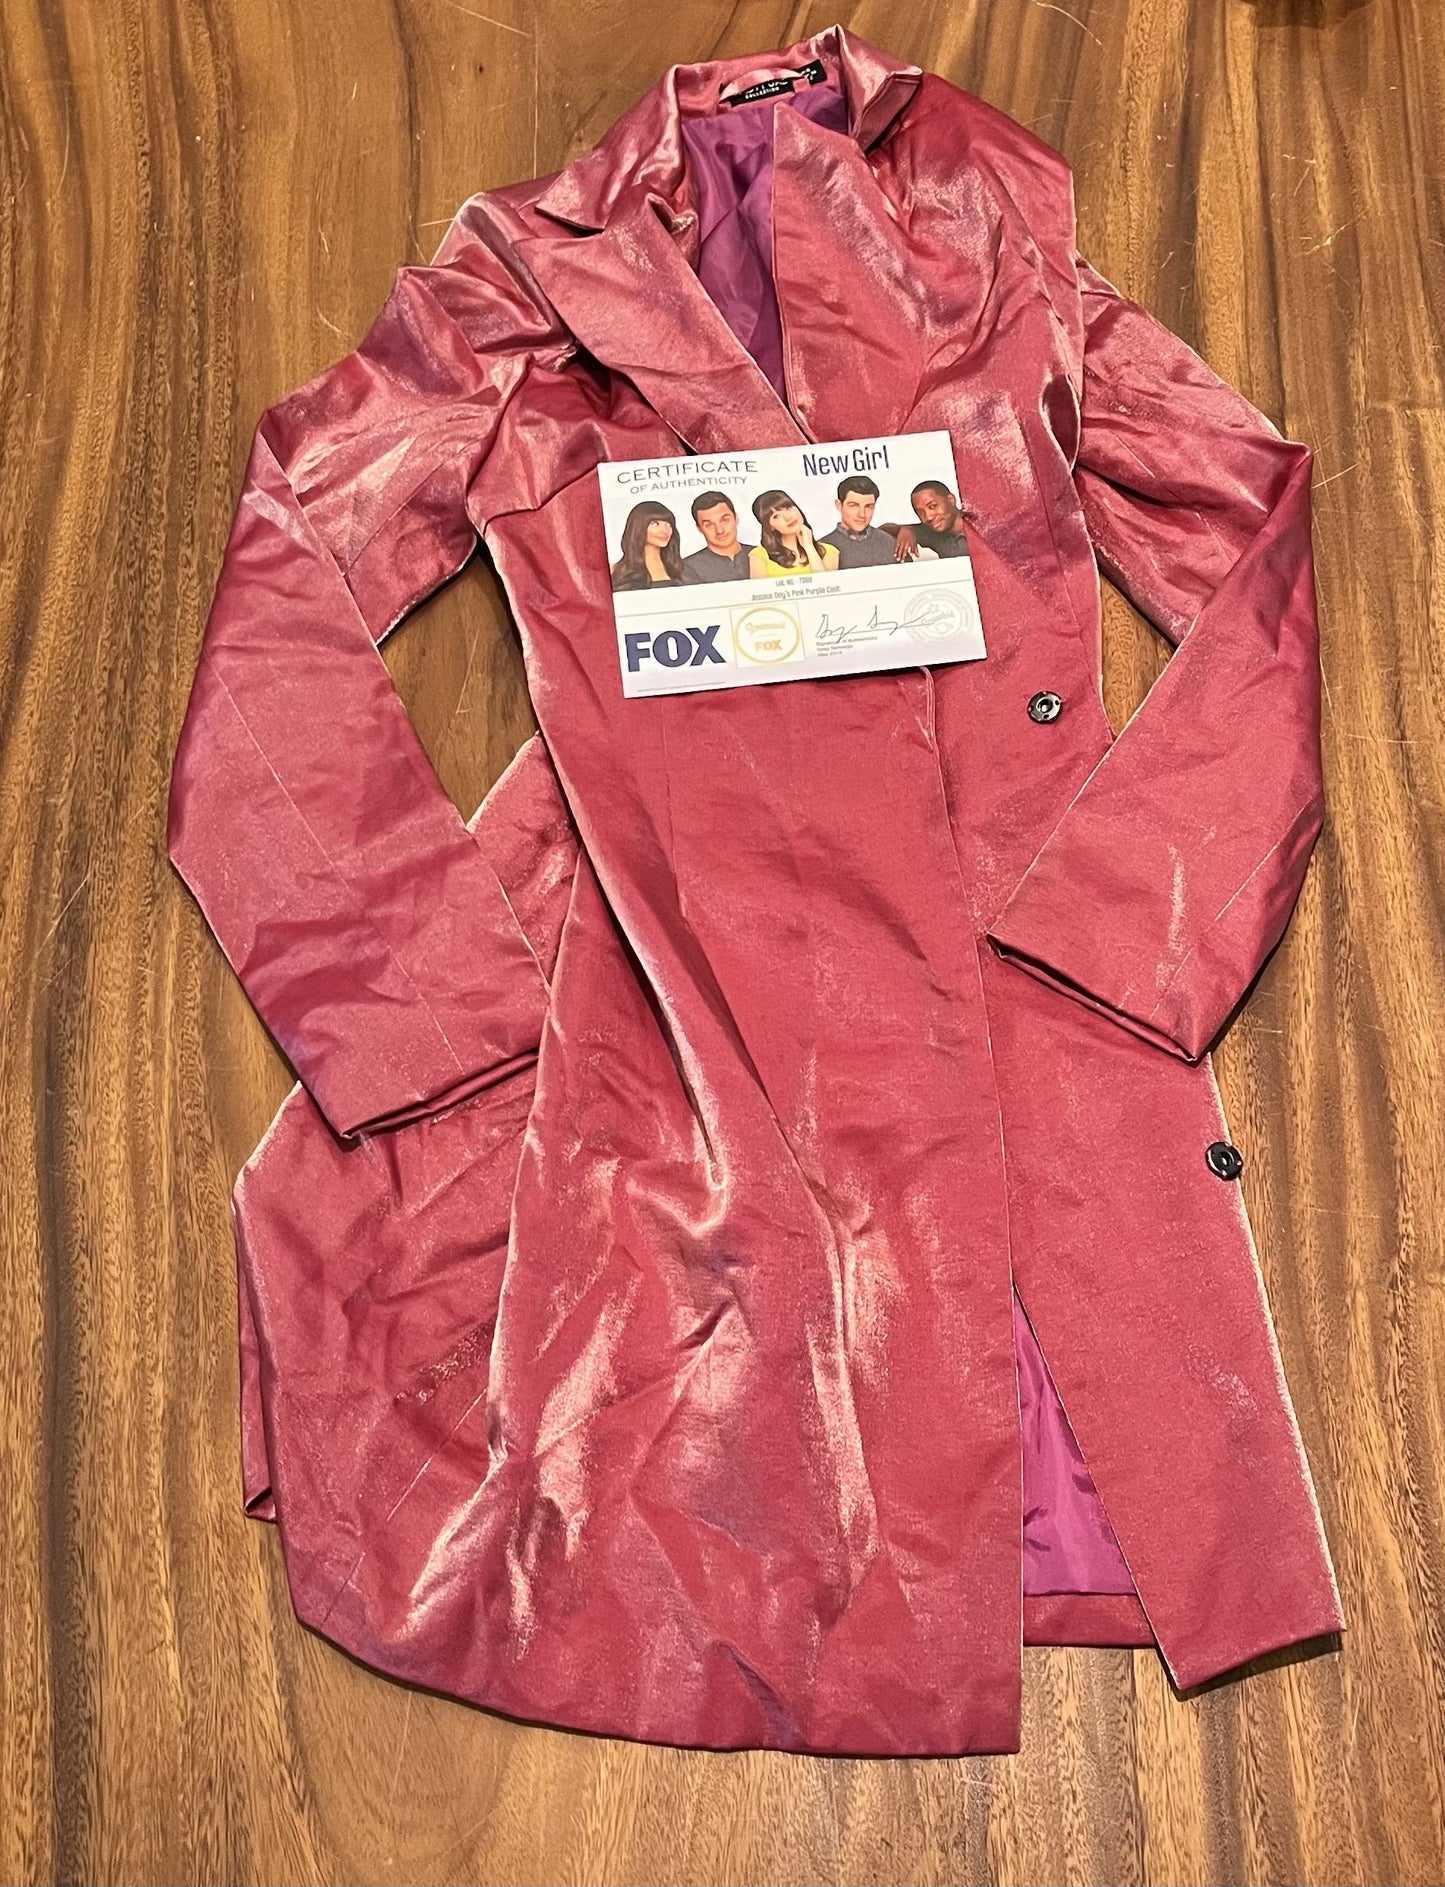 NEW GIRL: Jess' Purple and Pink Jacket